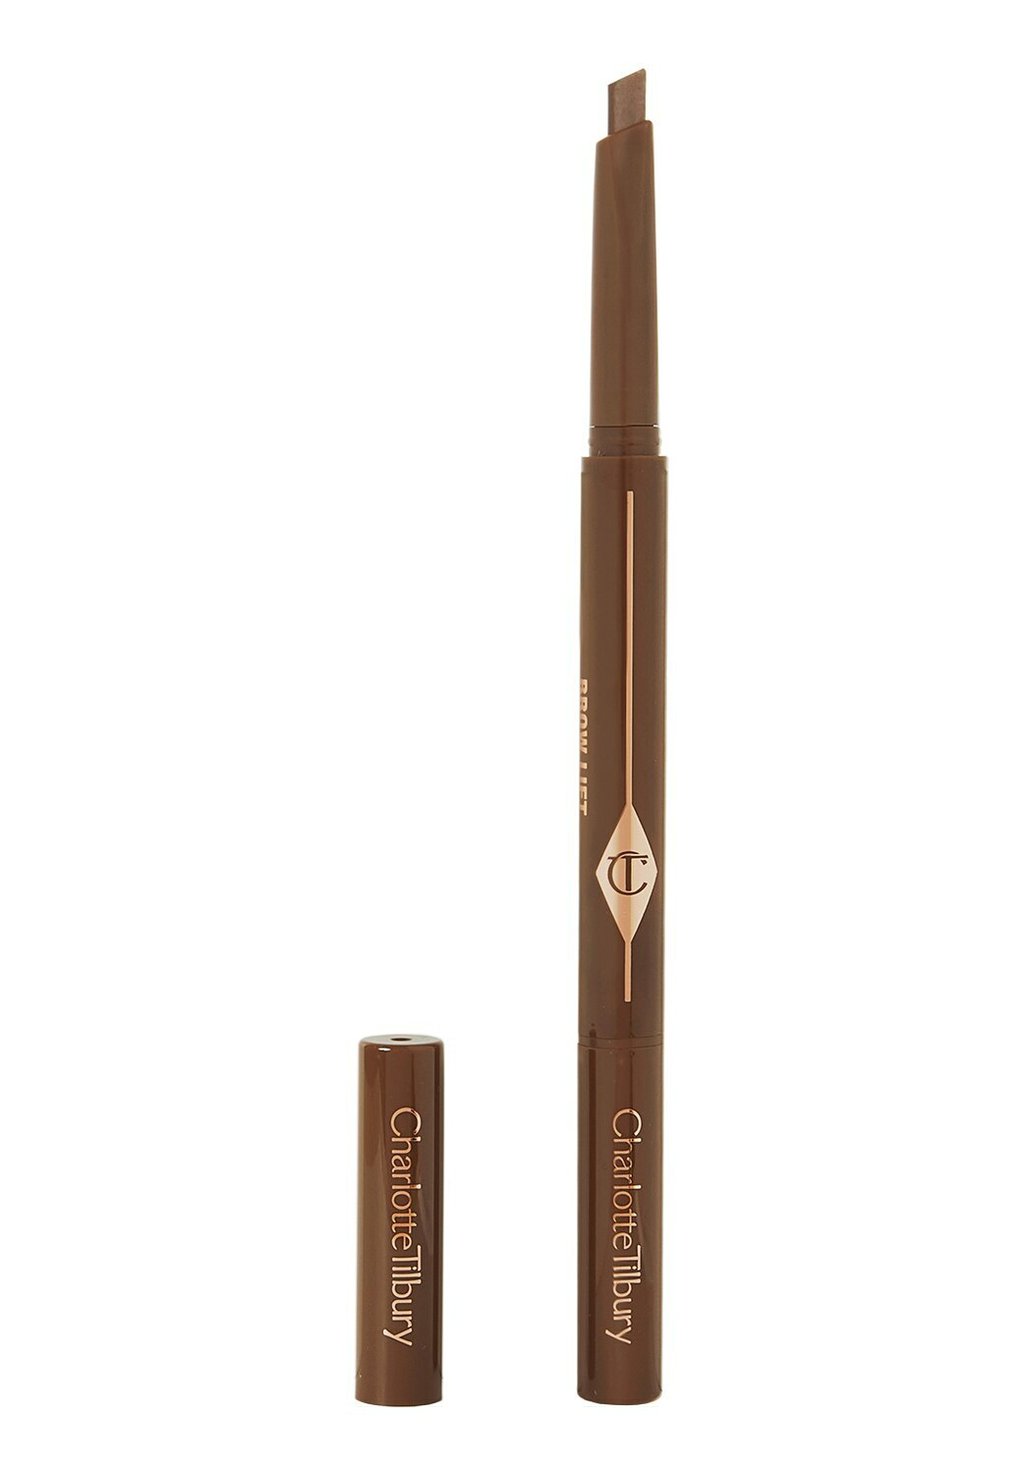 Карандаш для бровей BROW LIFT Charlotte Tilbury, цвет natural brown карандаш для бровей charlotte tilbury brow lift оттенок natural brown